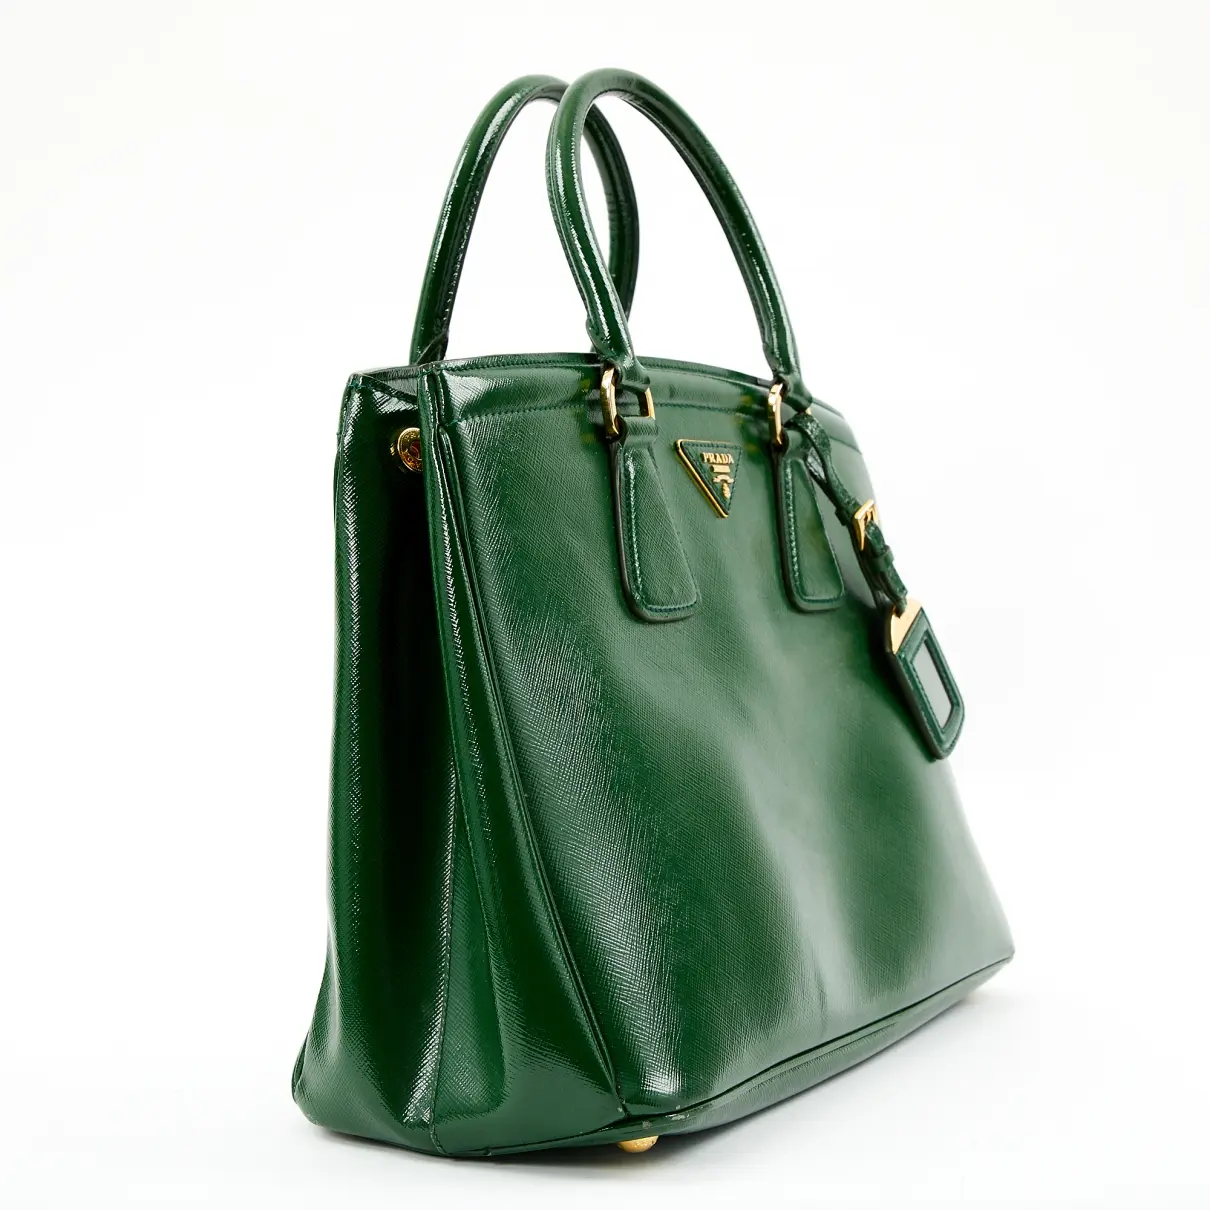 Prada Patent leather bag for sale